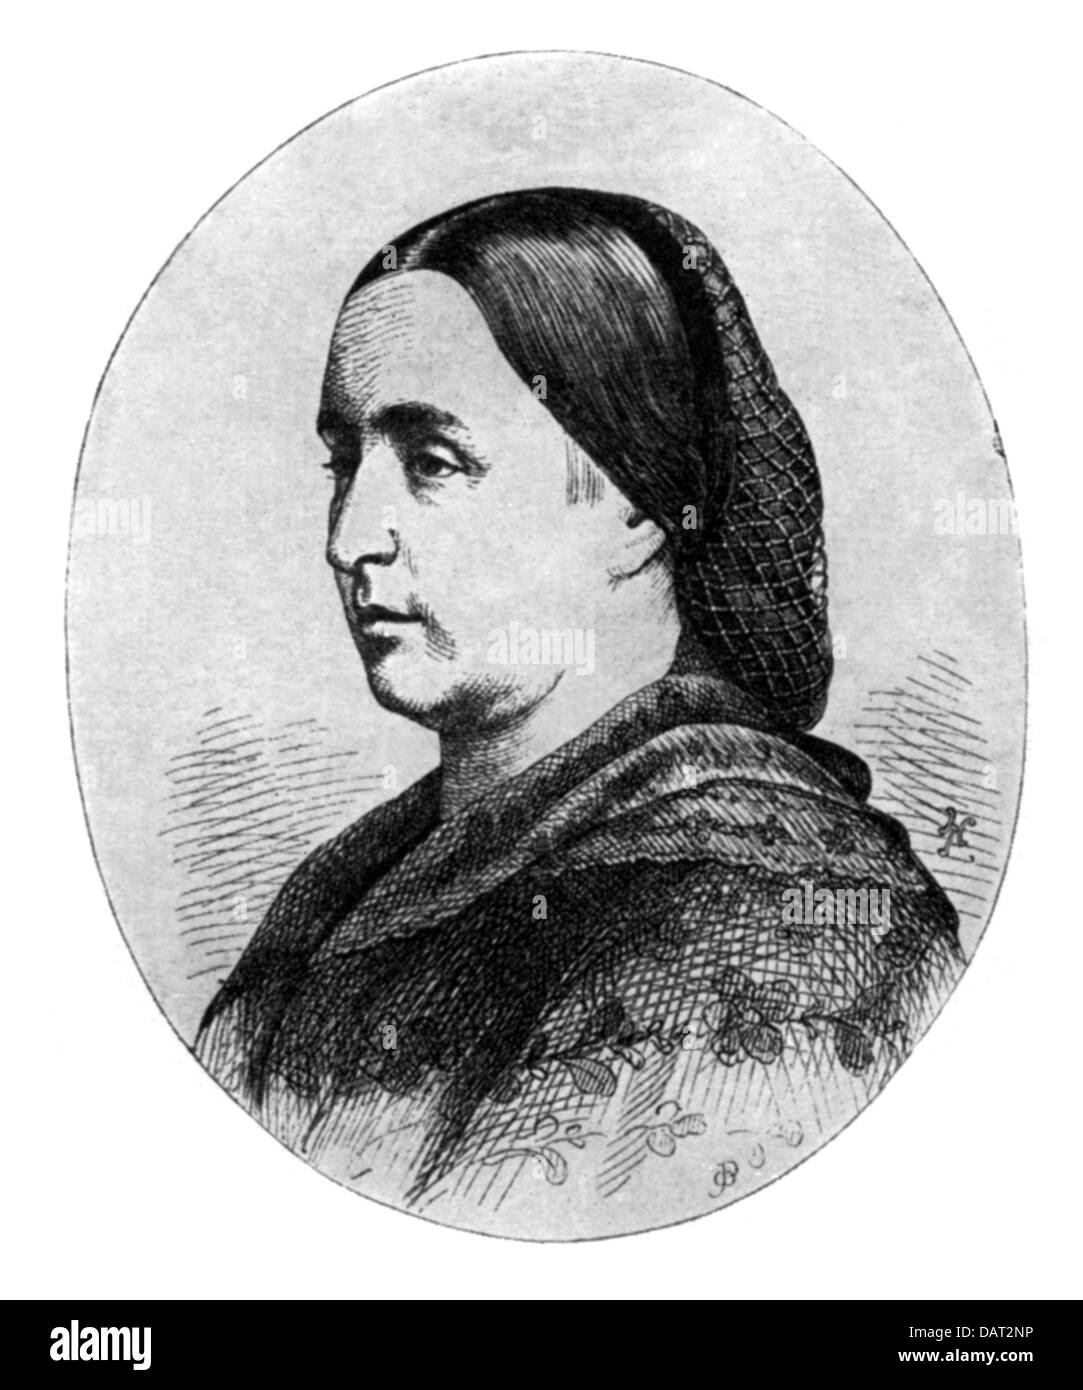 Svetla, Karolina, 24.2.1830 - 7.9.1899, Czech authoress / writer, portrait, wood engraving, 19th century, Stock Photo